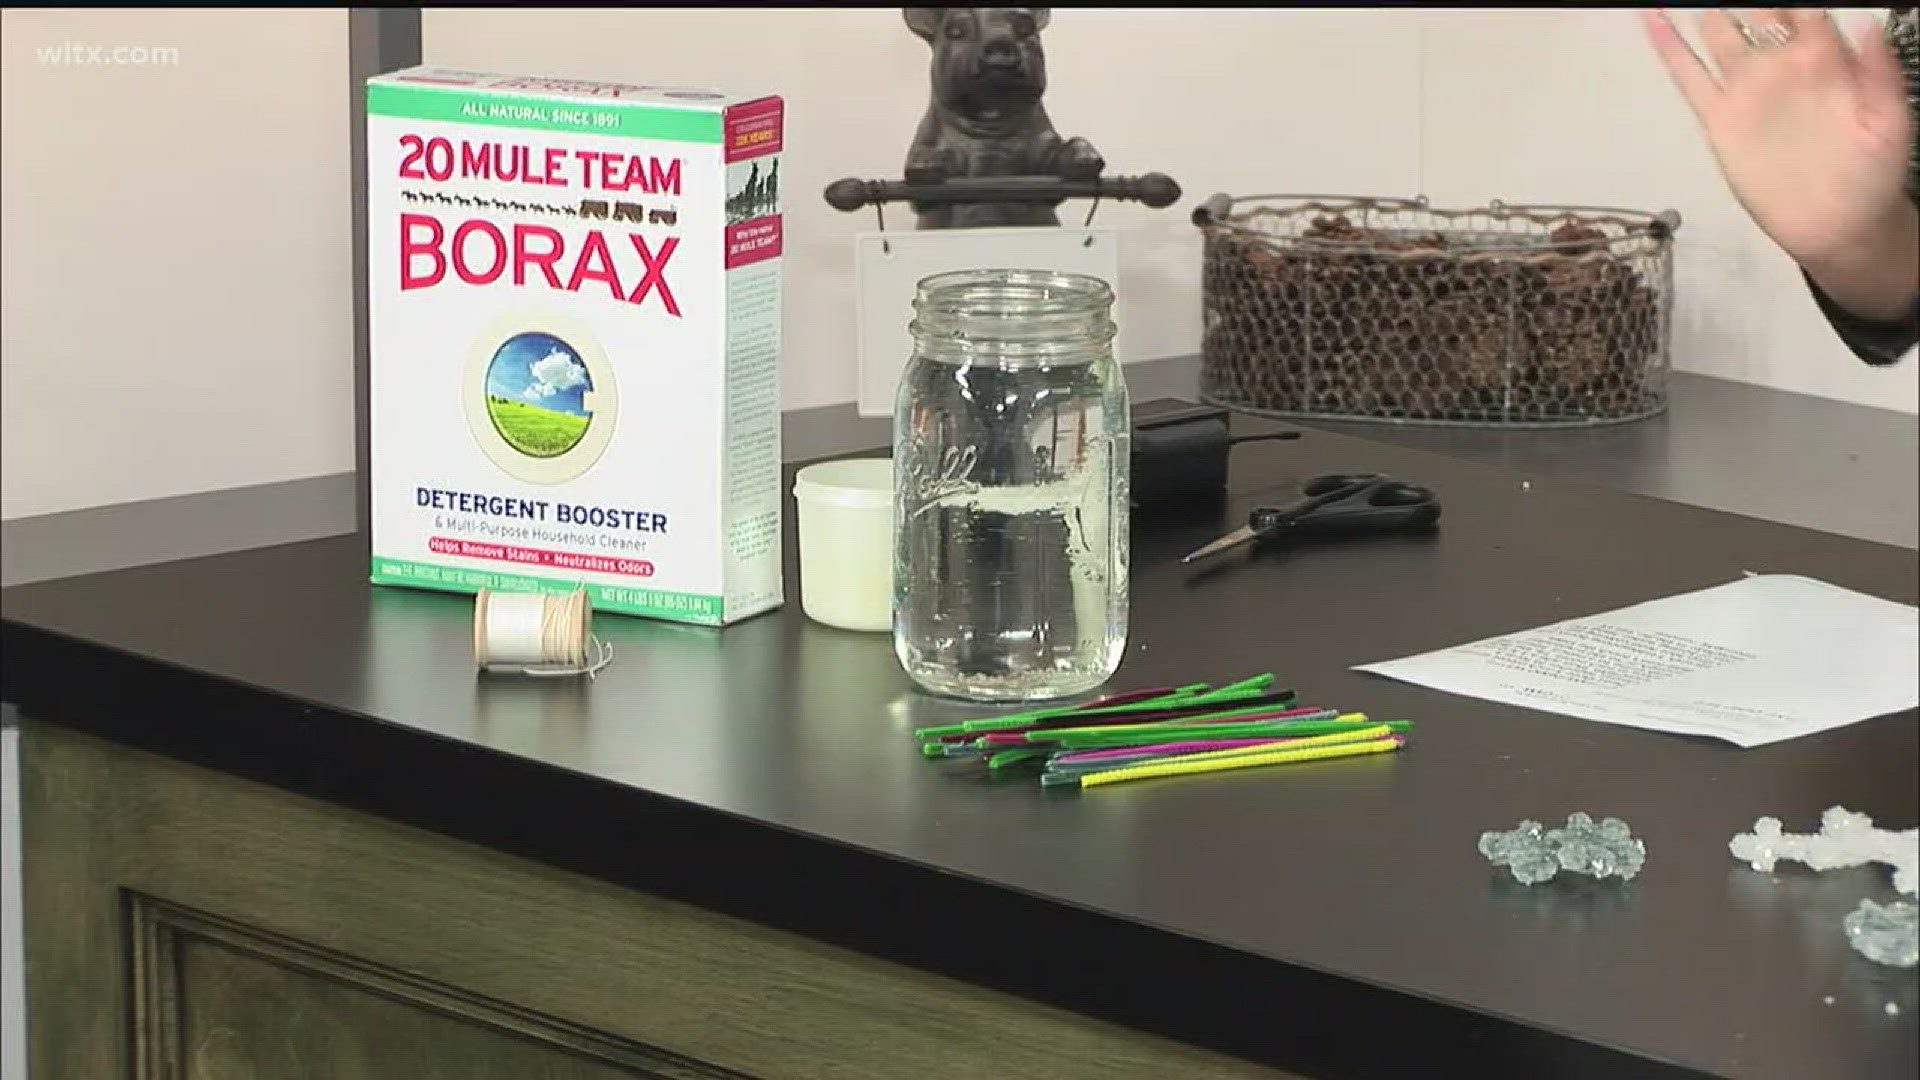 News 19's Whitney Sullivan shows us how to make a Borax Crystal Snowflake